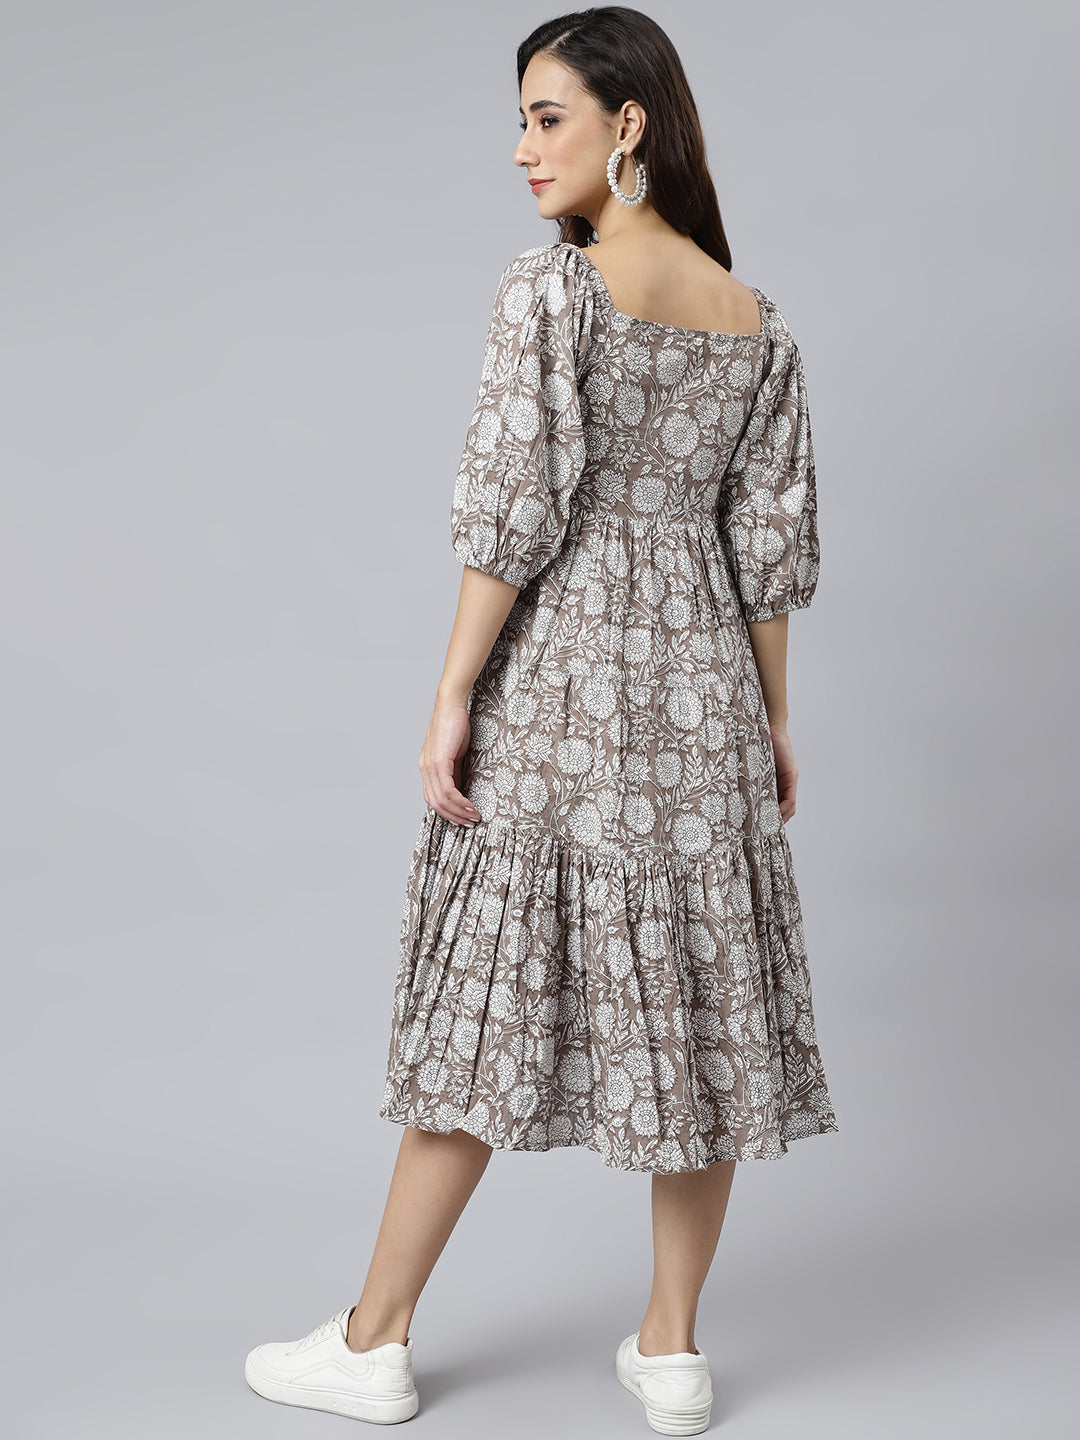 Women's Floral Printed Grey Cotton Dress - Janasya USA